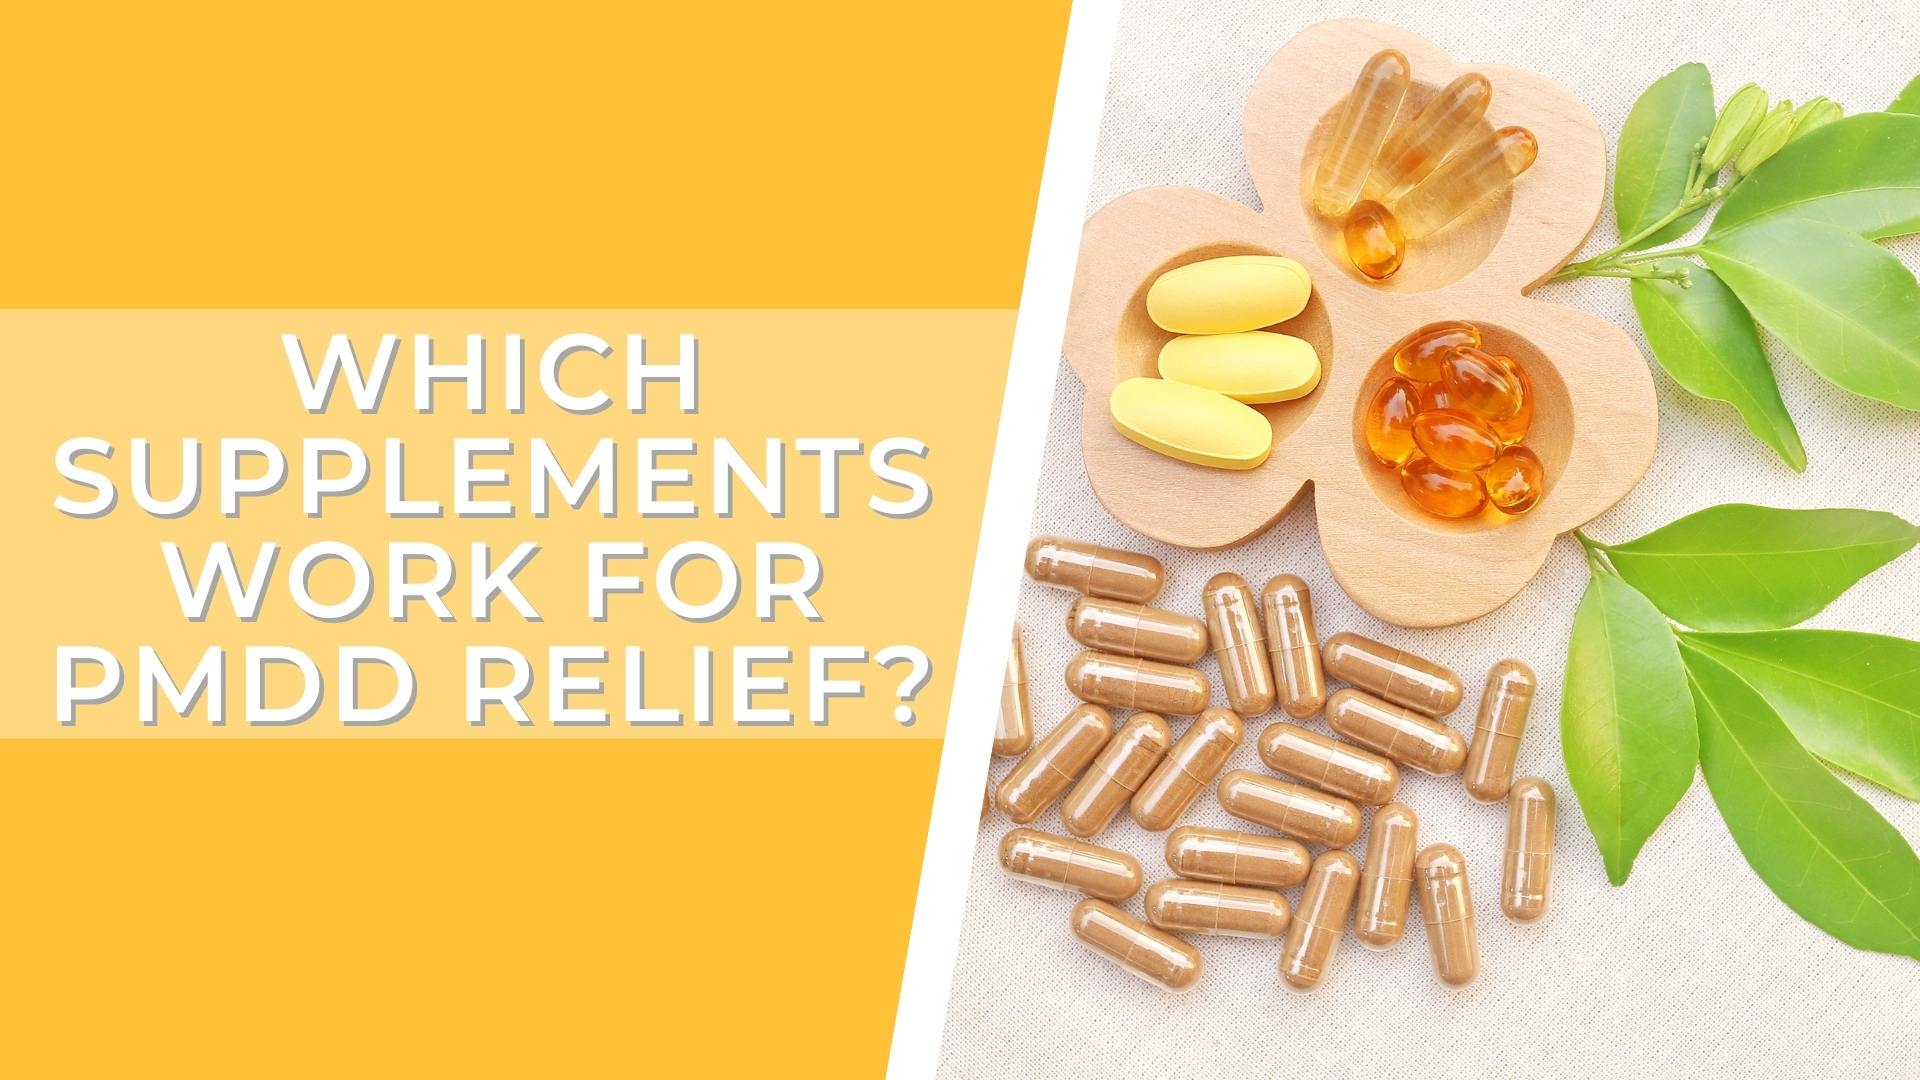 pmdd relief supplements for pmdd healing